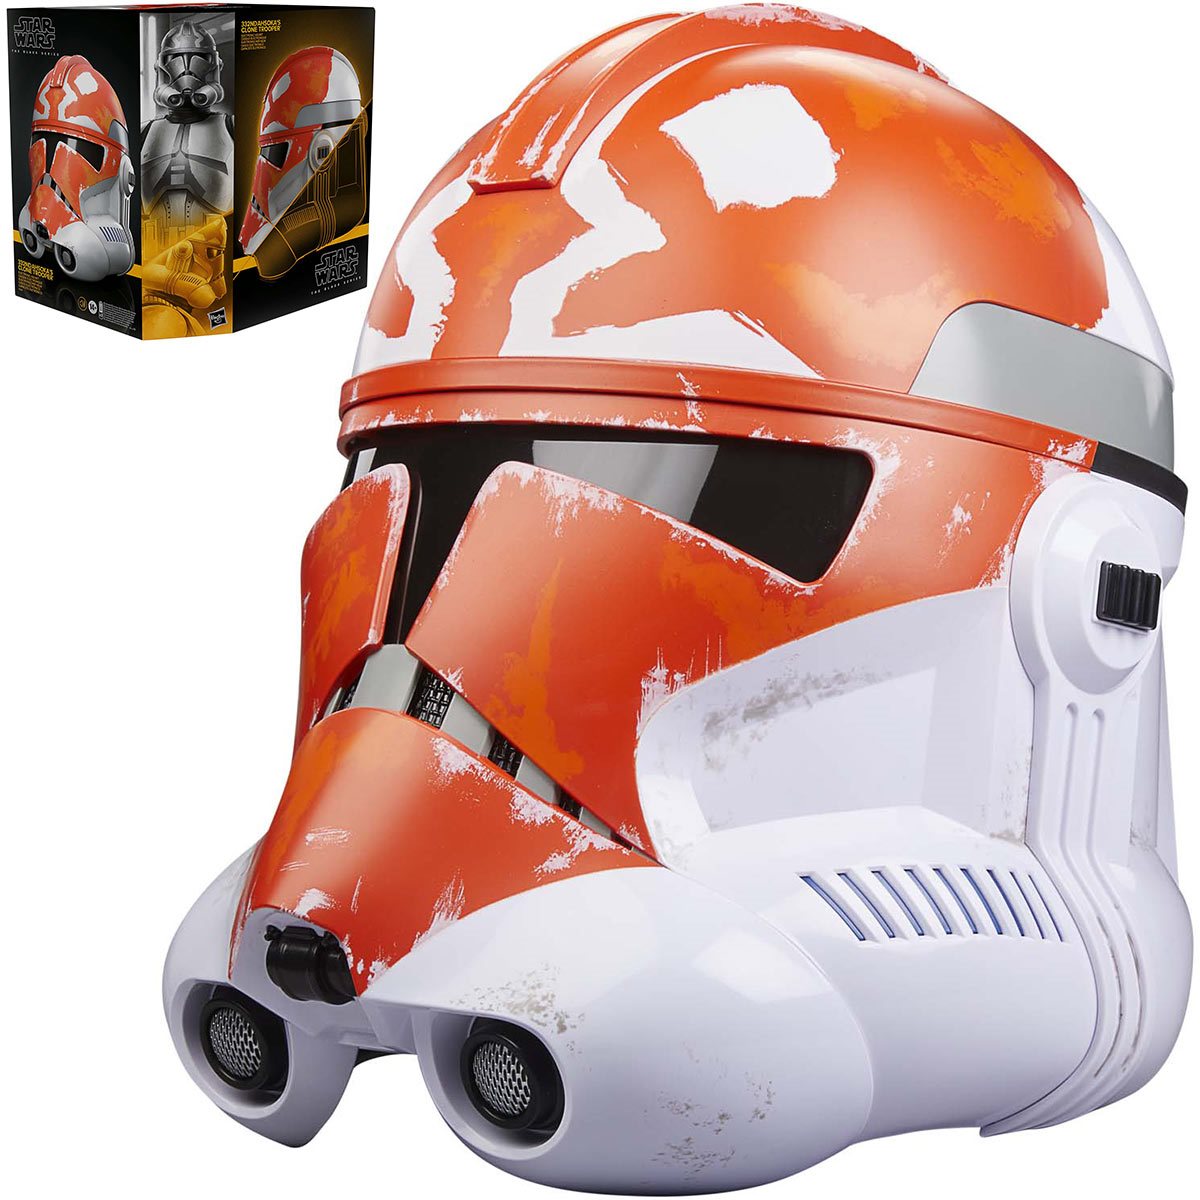 Star Wars: The Black Series 332nd Ahsoka’s Clone Trooper Electronic Helmet Prop Replica Hasbro